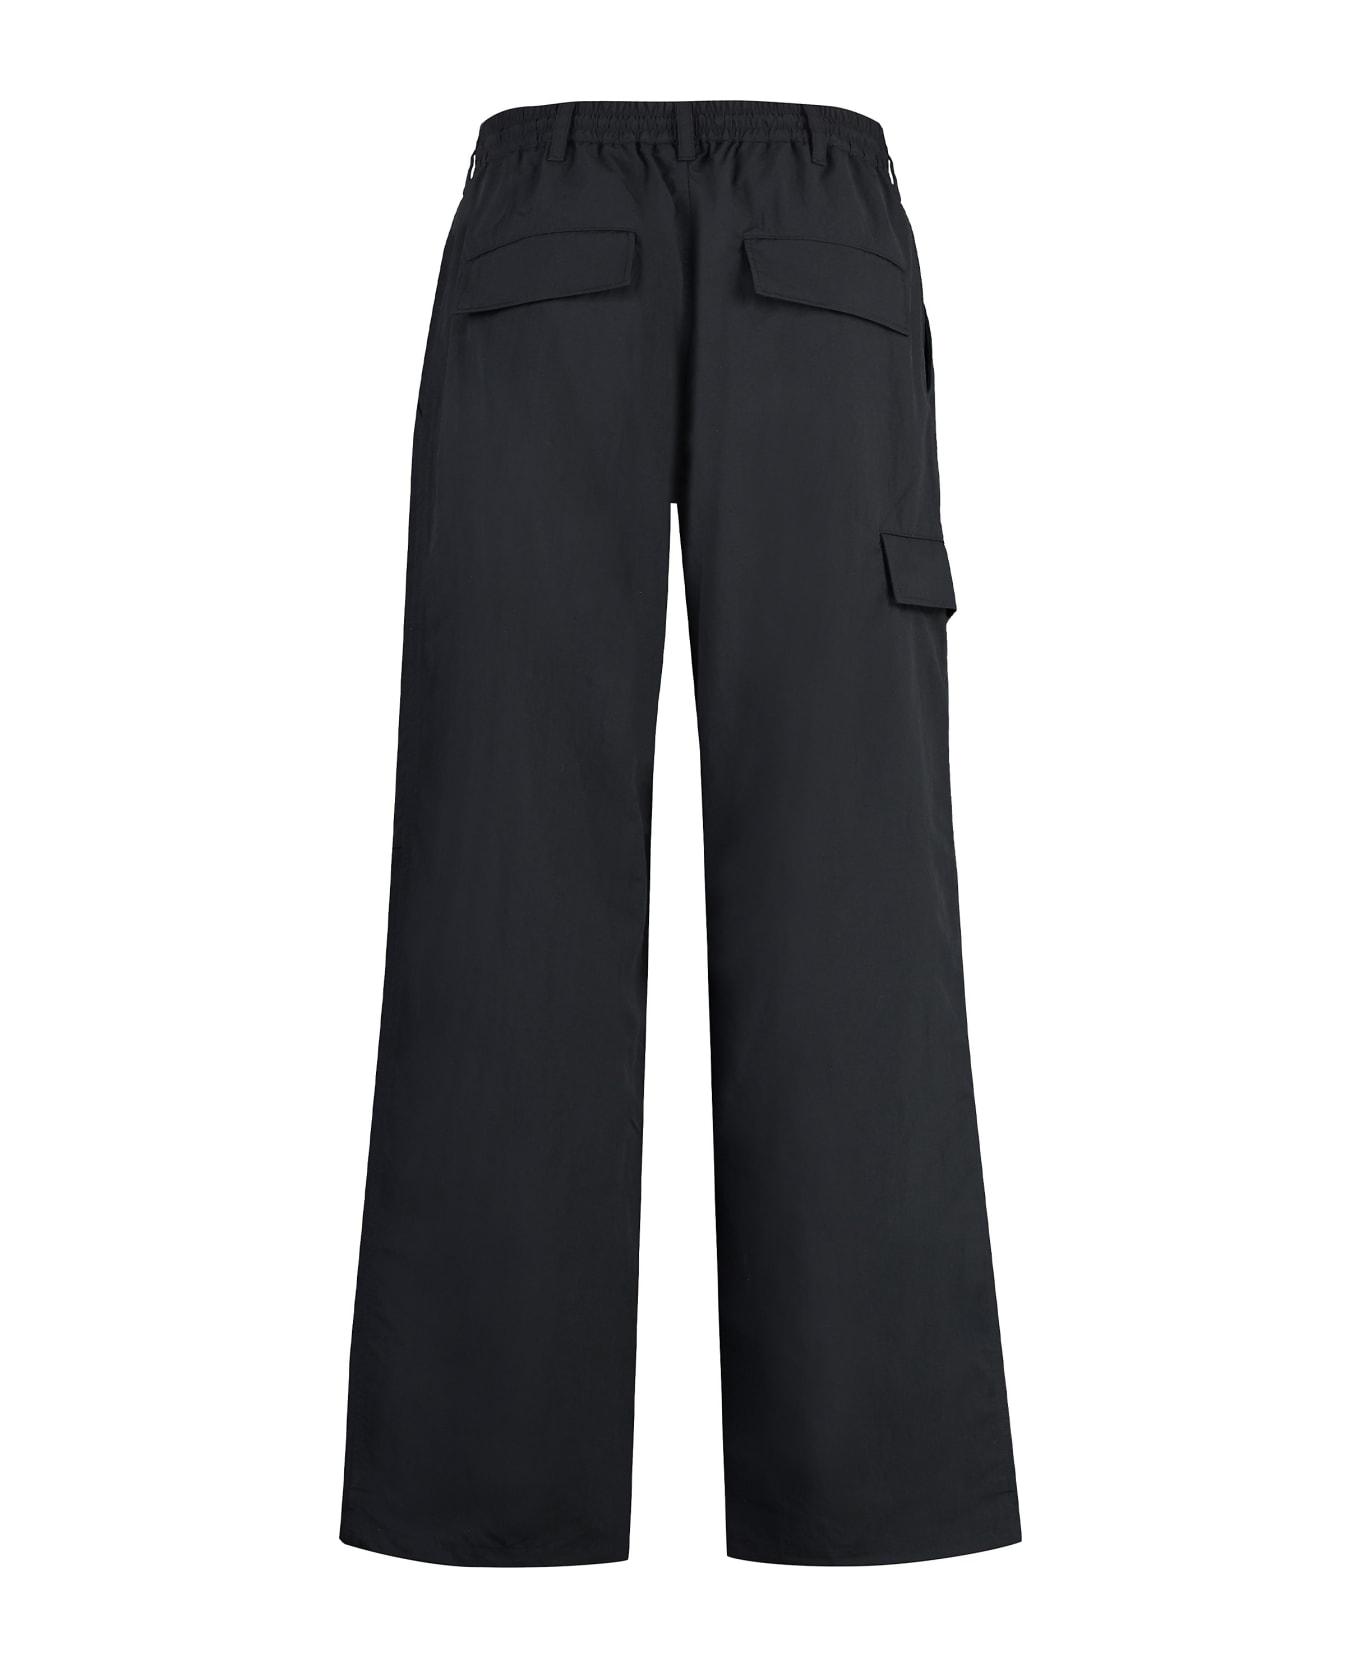 Y-3 Technical Fabric Pants - black ボトムス